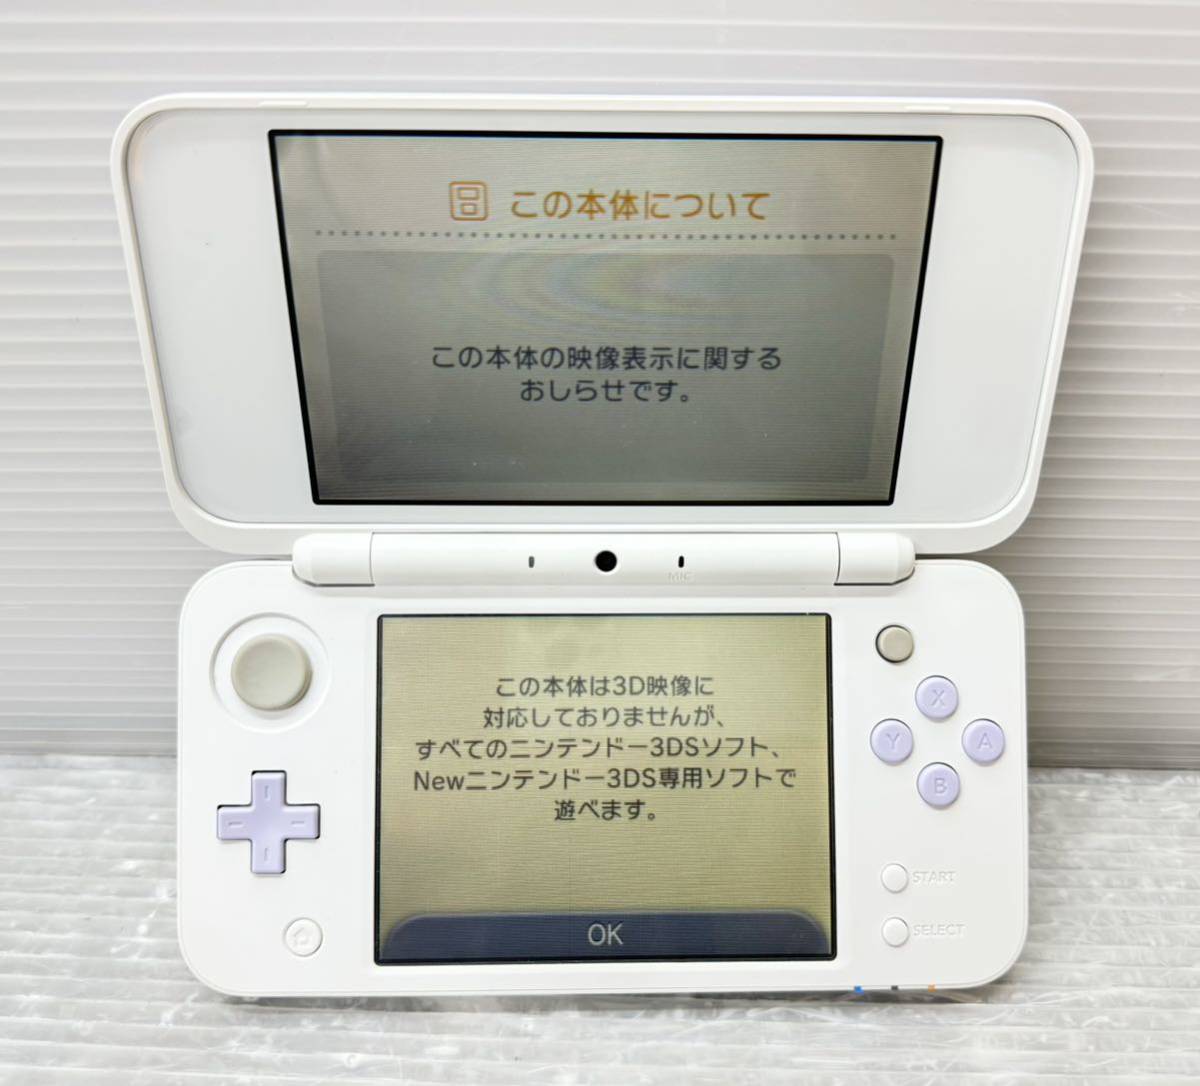 Nintendo newニンテンドー2DS LL (JAN-001) ホワイト×ラベンダー 本体